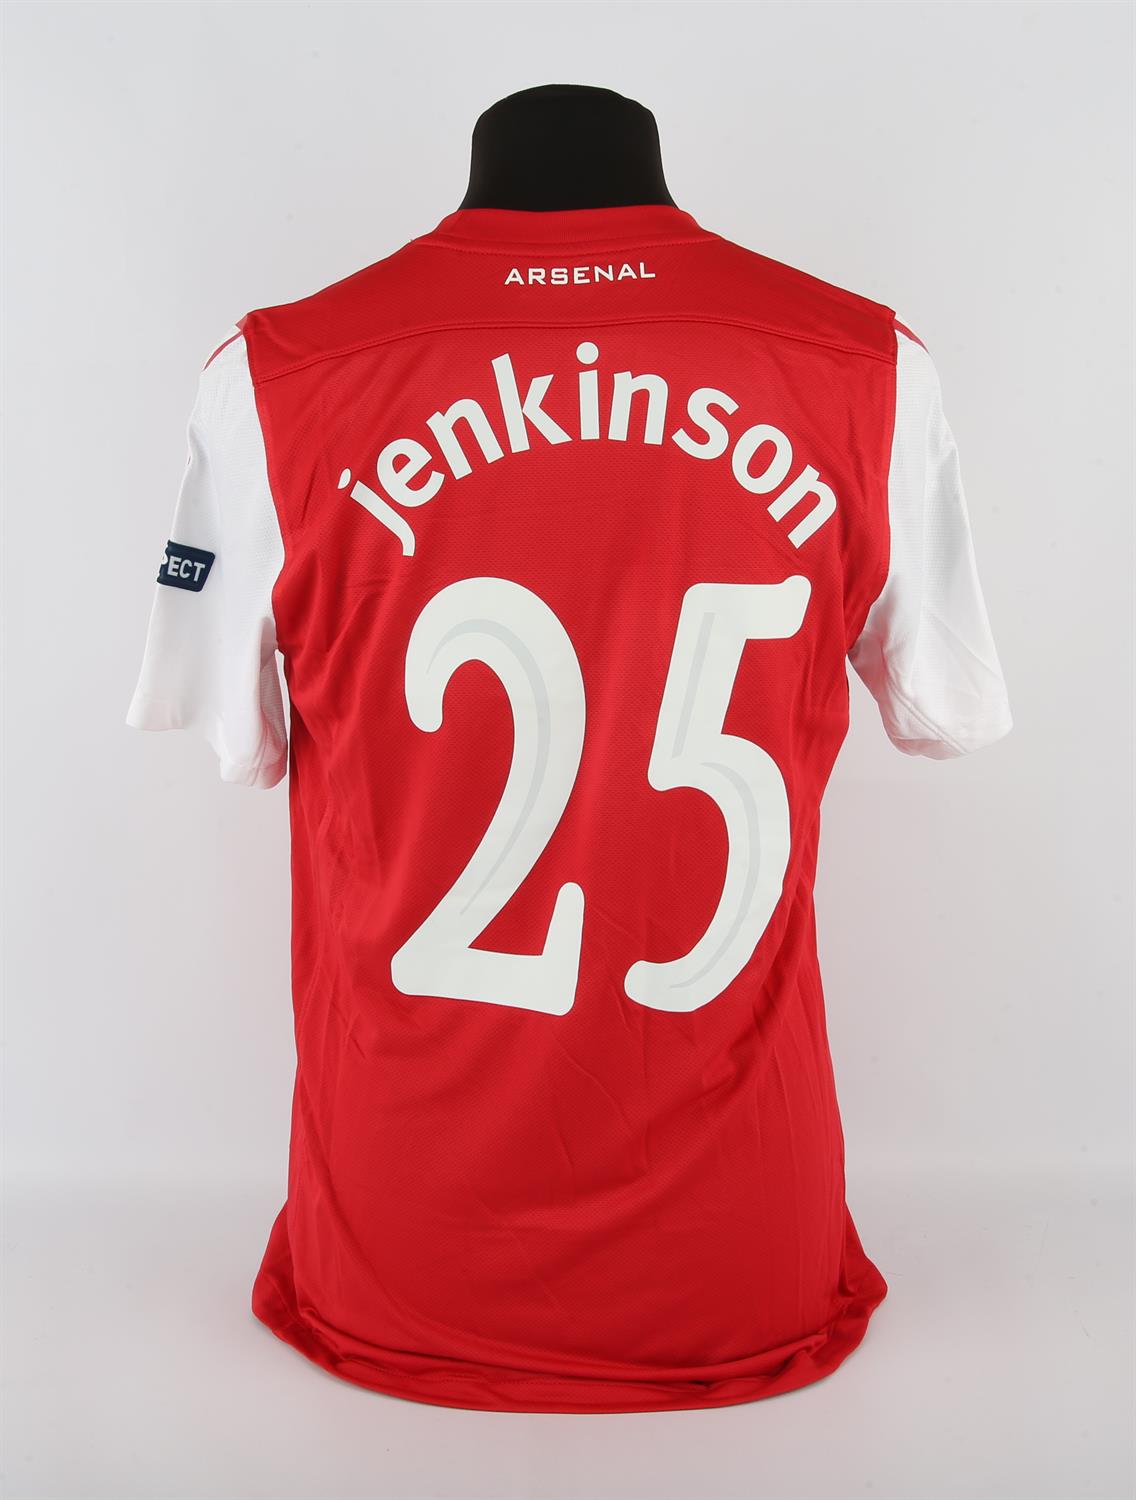 Arsenal Football club, Jenkinson (No.25) 2011 - 2012 shirt. Worn during season. Provenance Arsenal